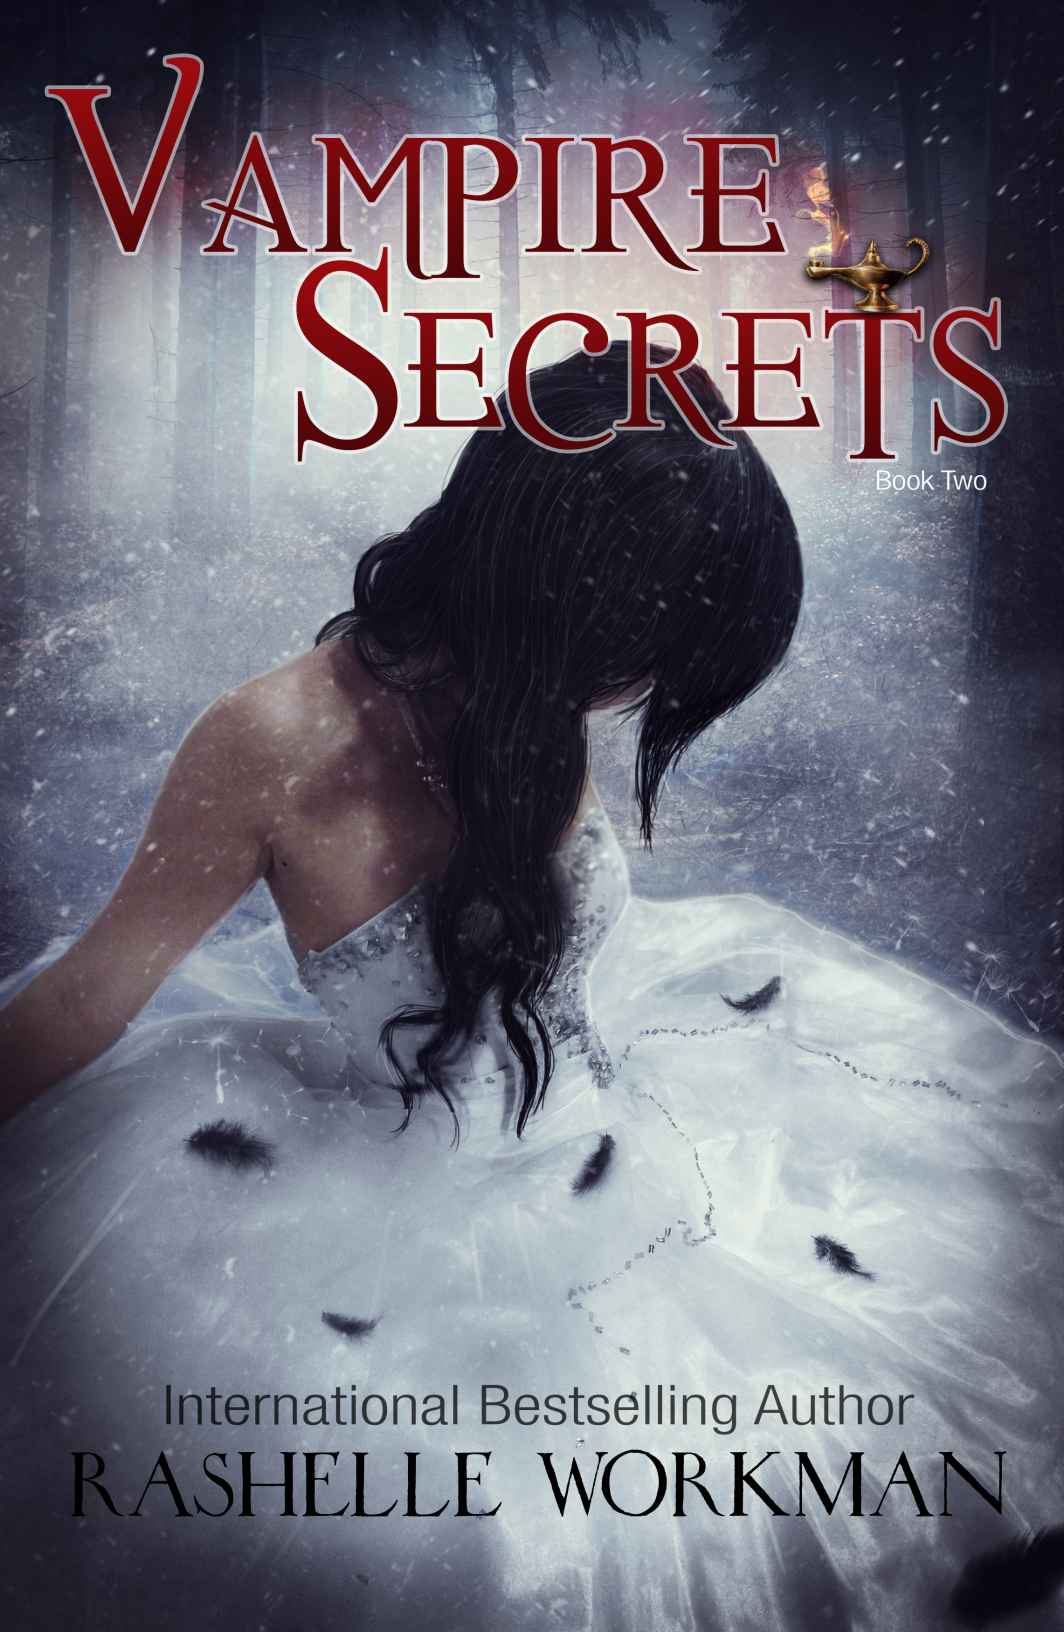 Vampire Secrets: Book 2 (Blood and Snow Season Two) by RaShelle Workman